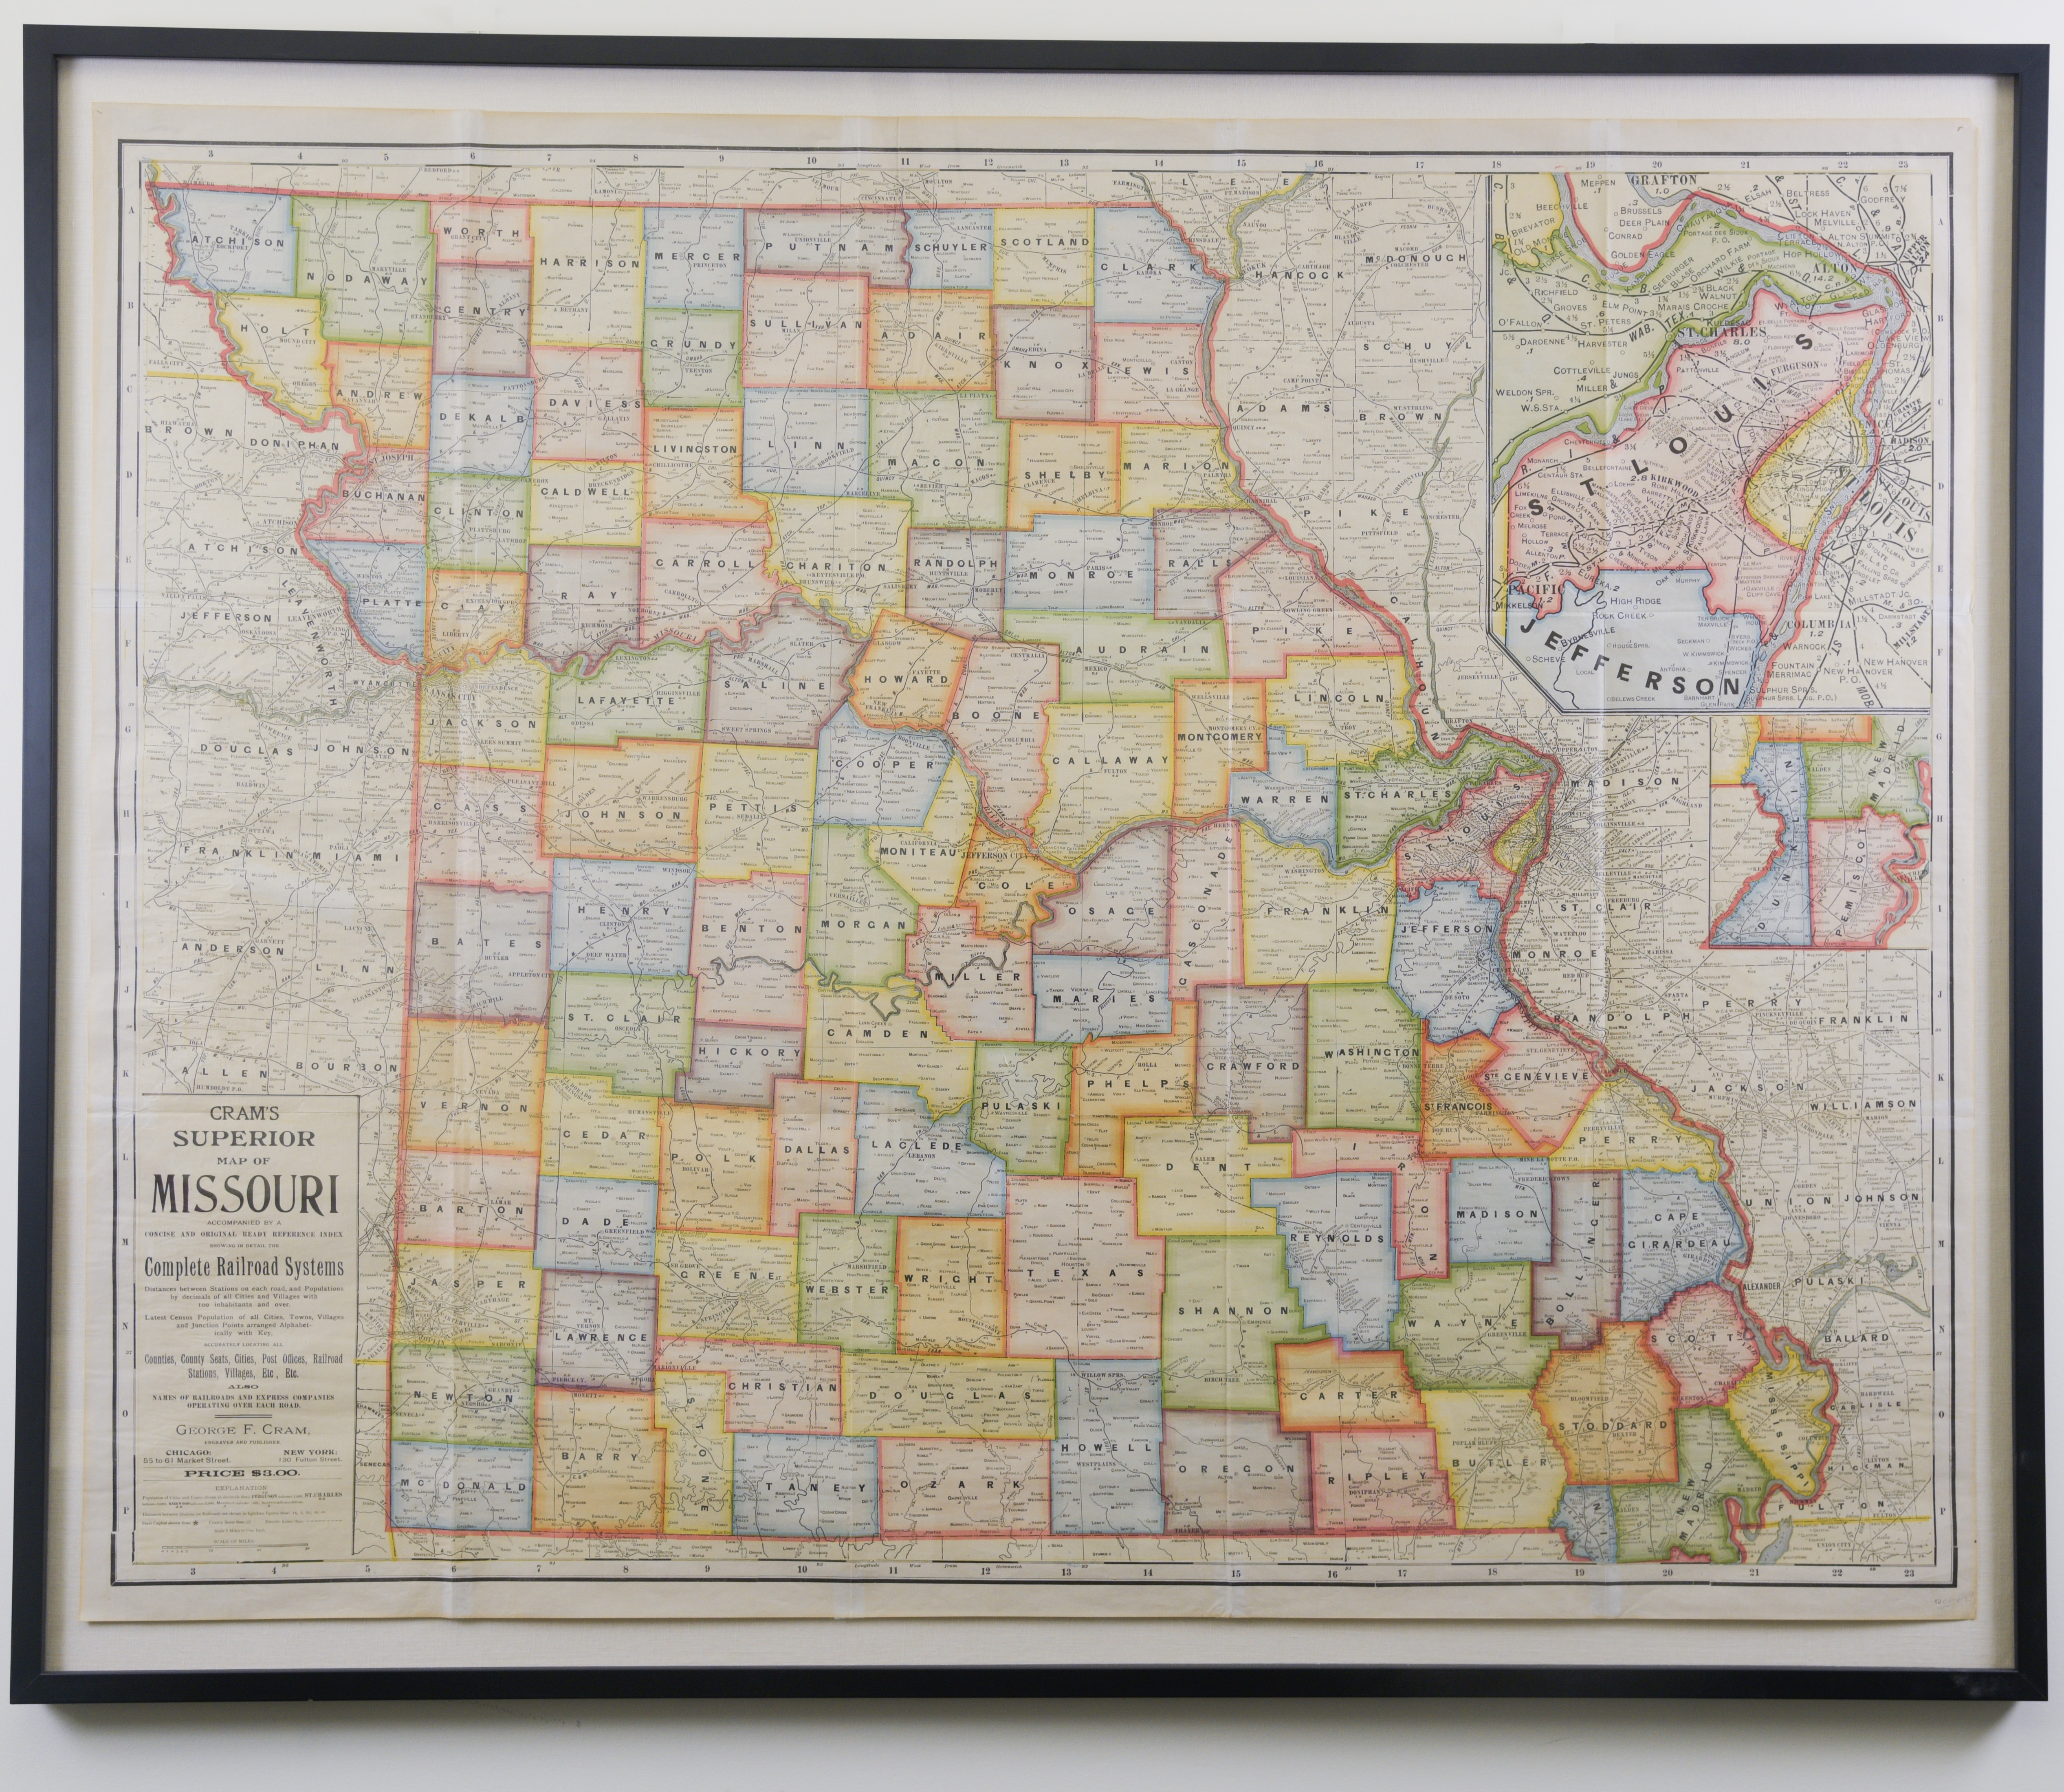 Cram S Superior Map Of Missouri Kansas City Public Library